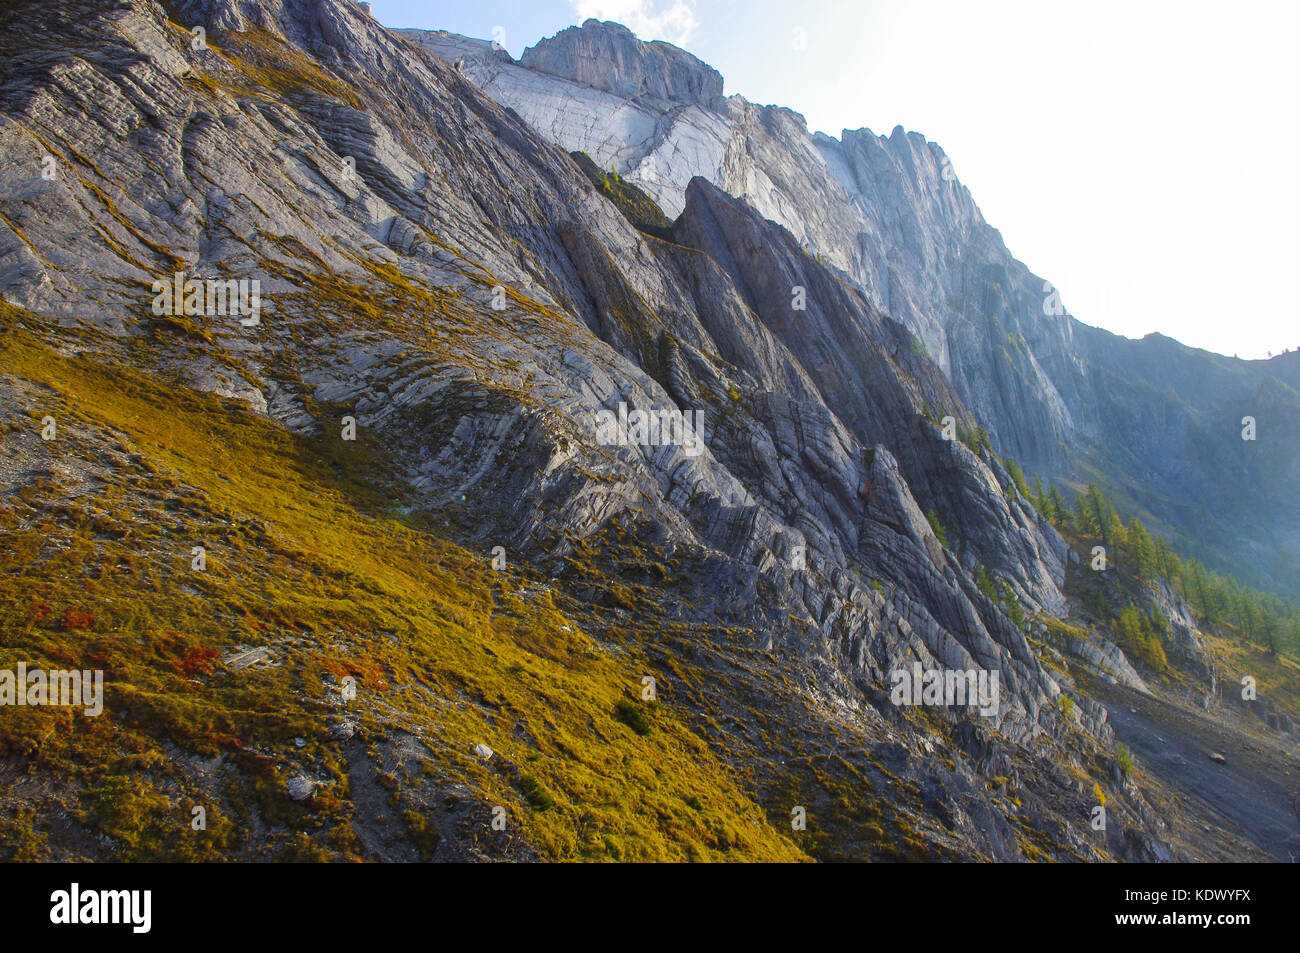 in Switzerland - on Photo Rock Alps Vaude, the Swiss Alpine Stock Alamy Mountain face